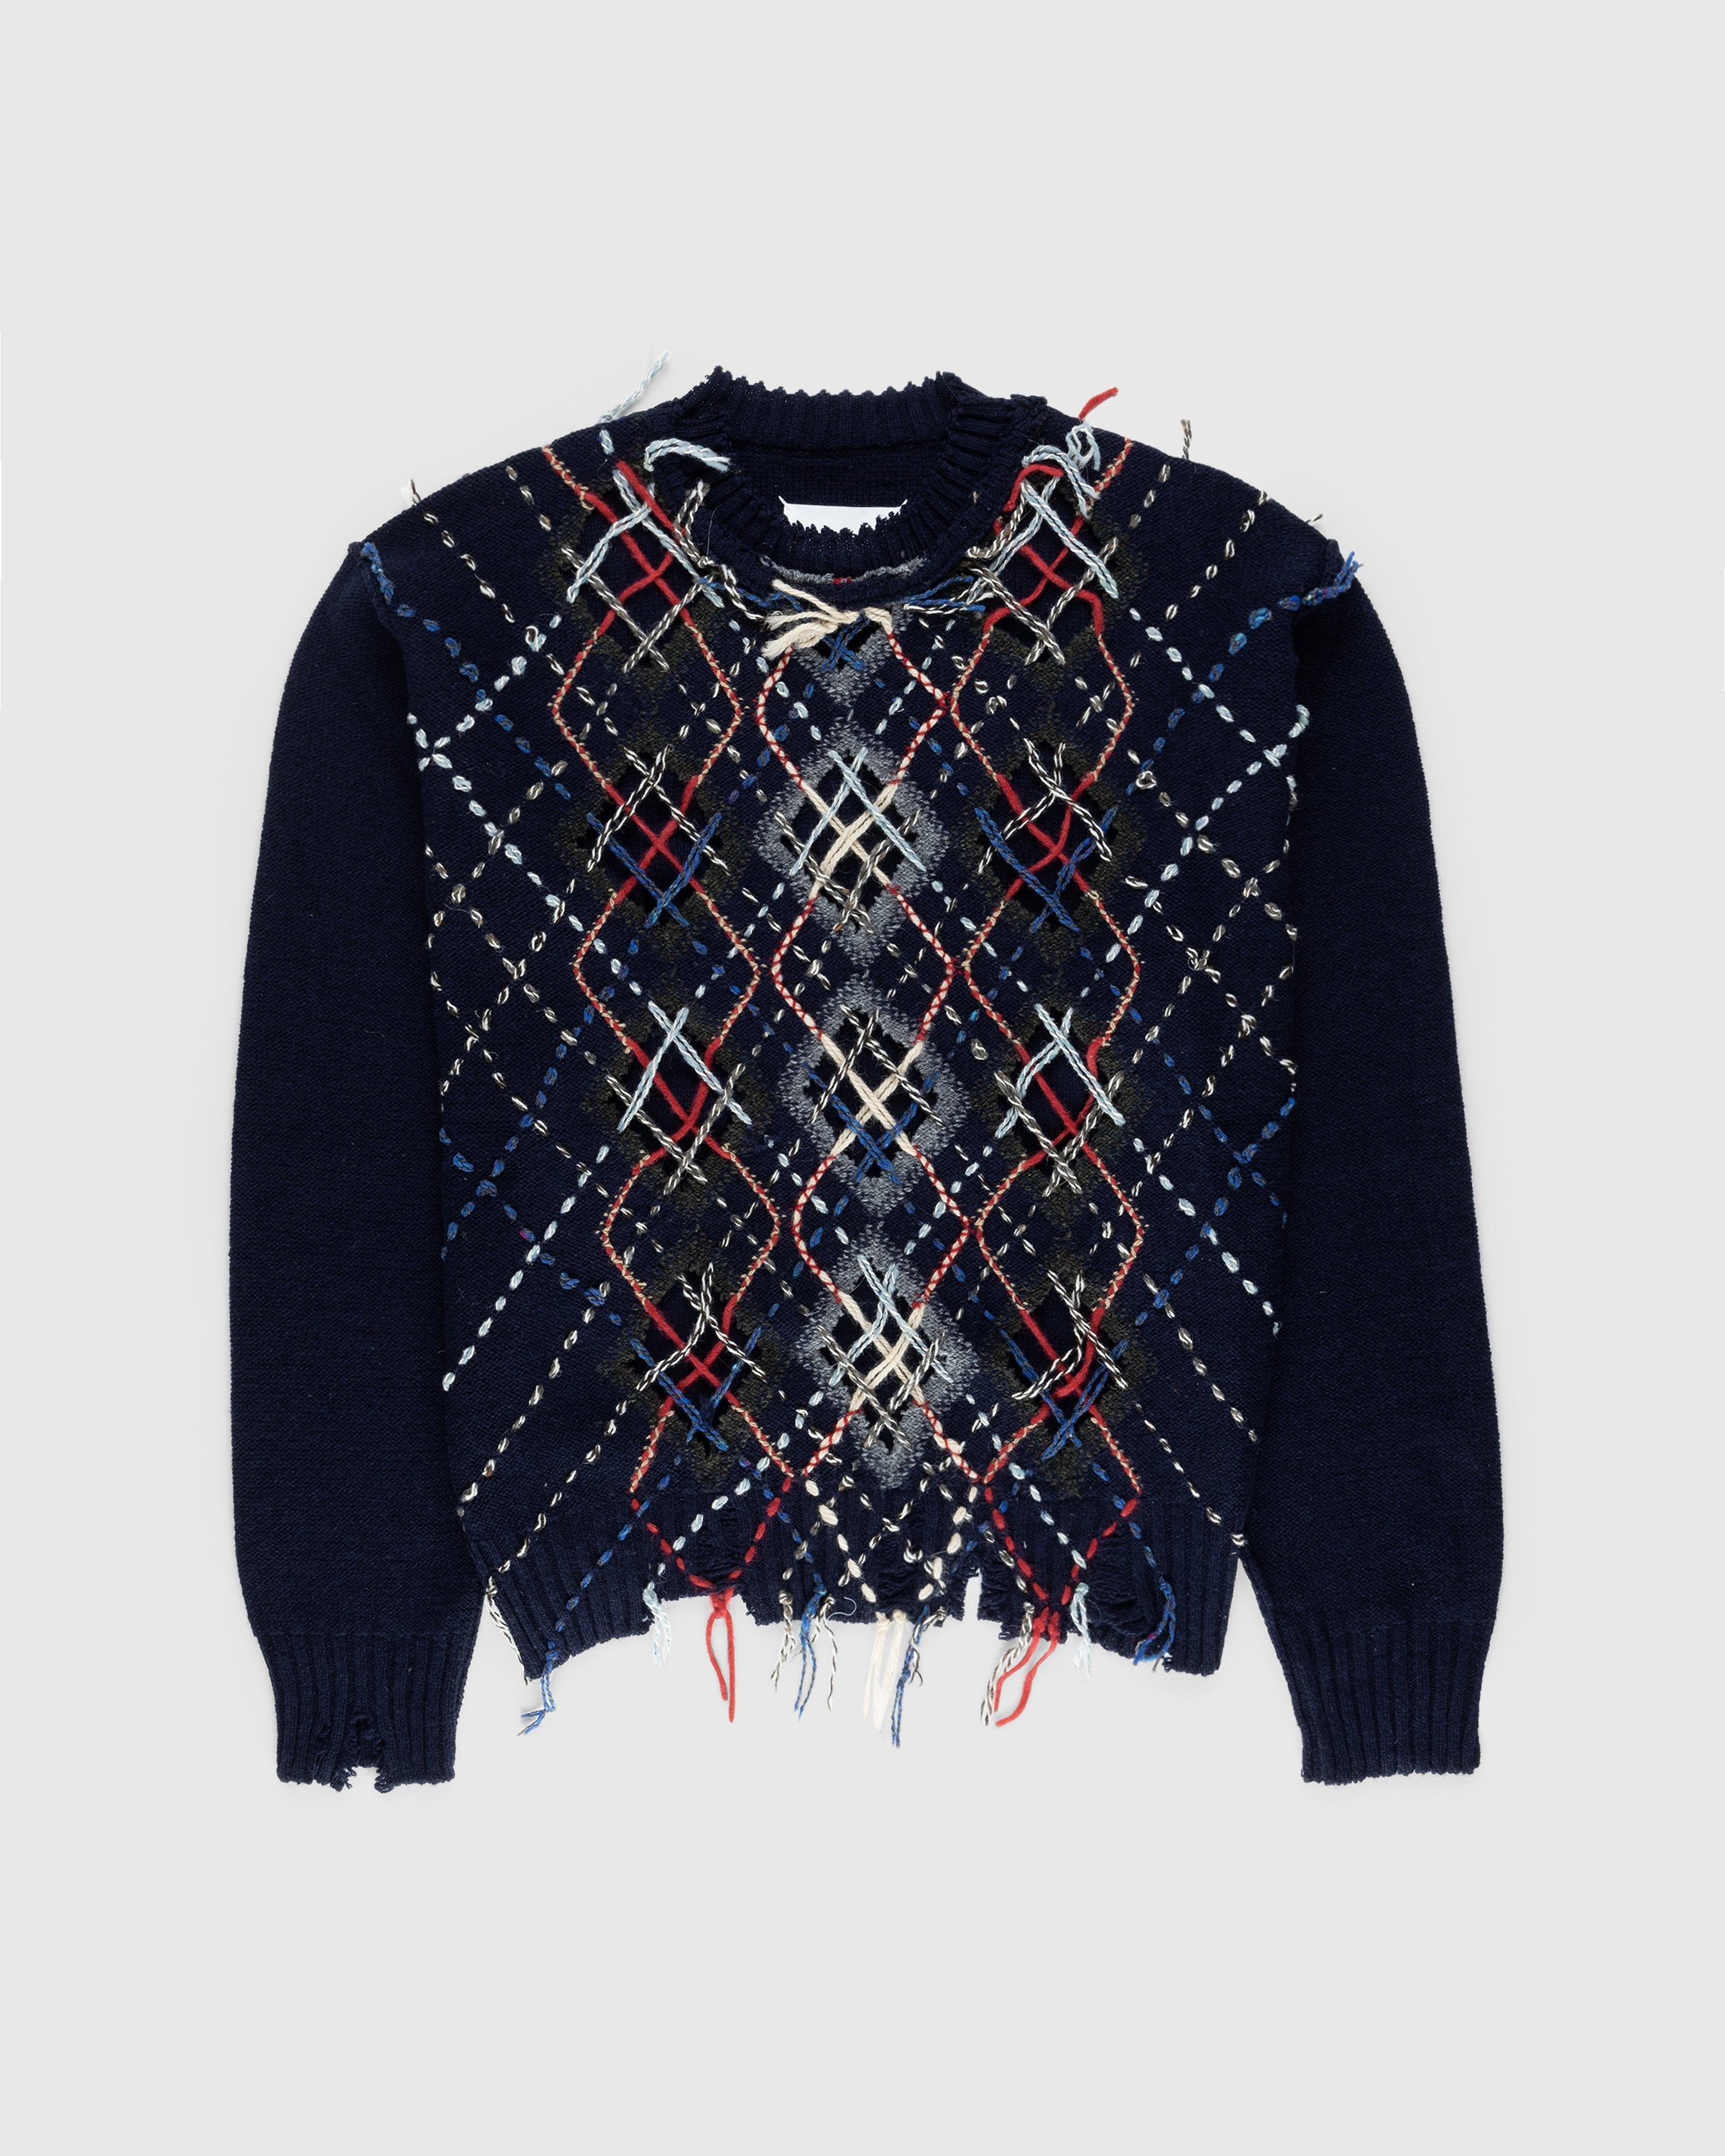 Maison Margiela – Distressed Wool Crewneck Sweater Multi - Sweats - Multi - Image 1